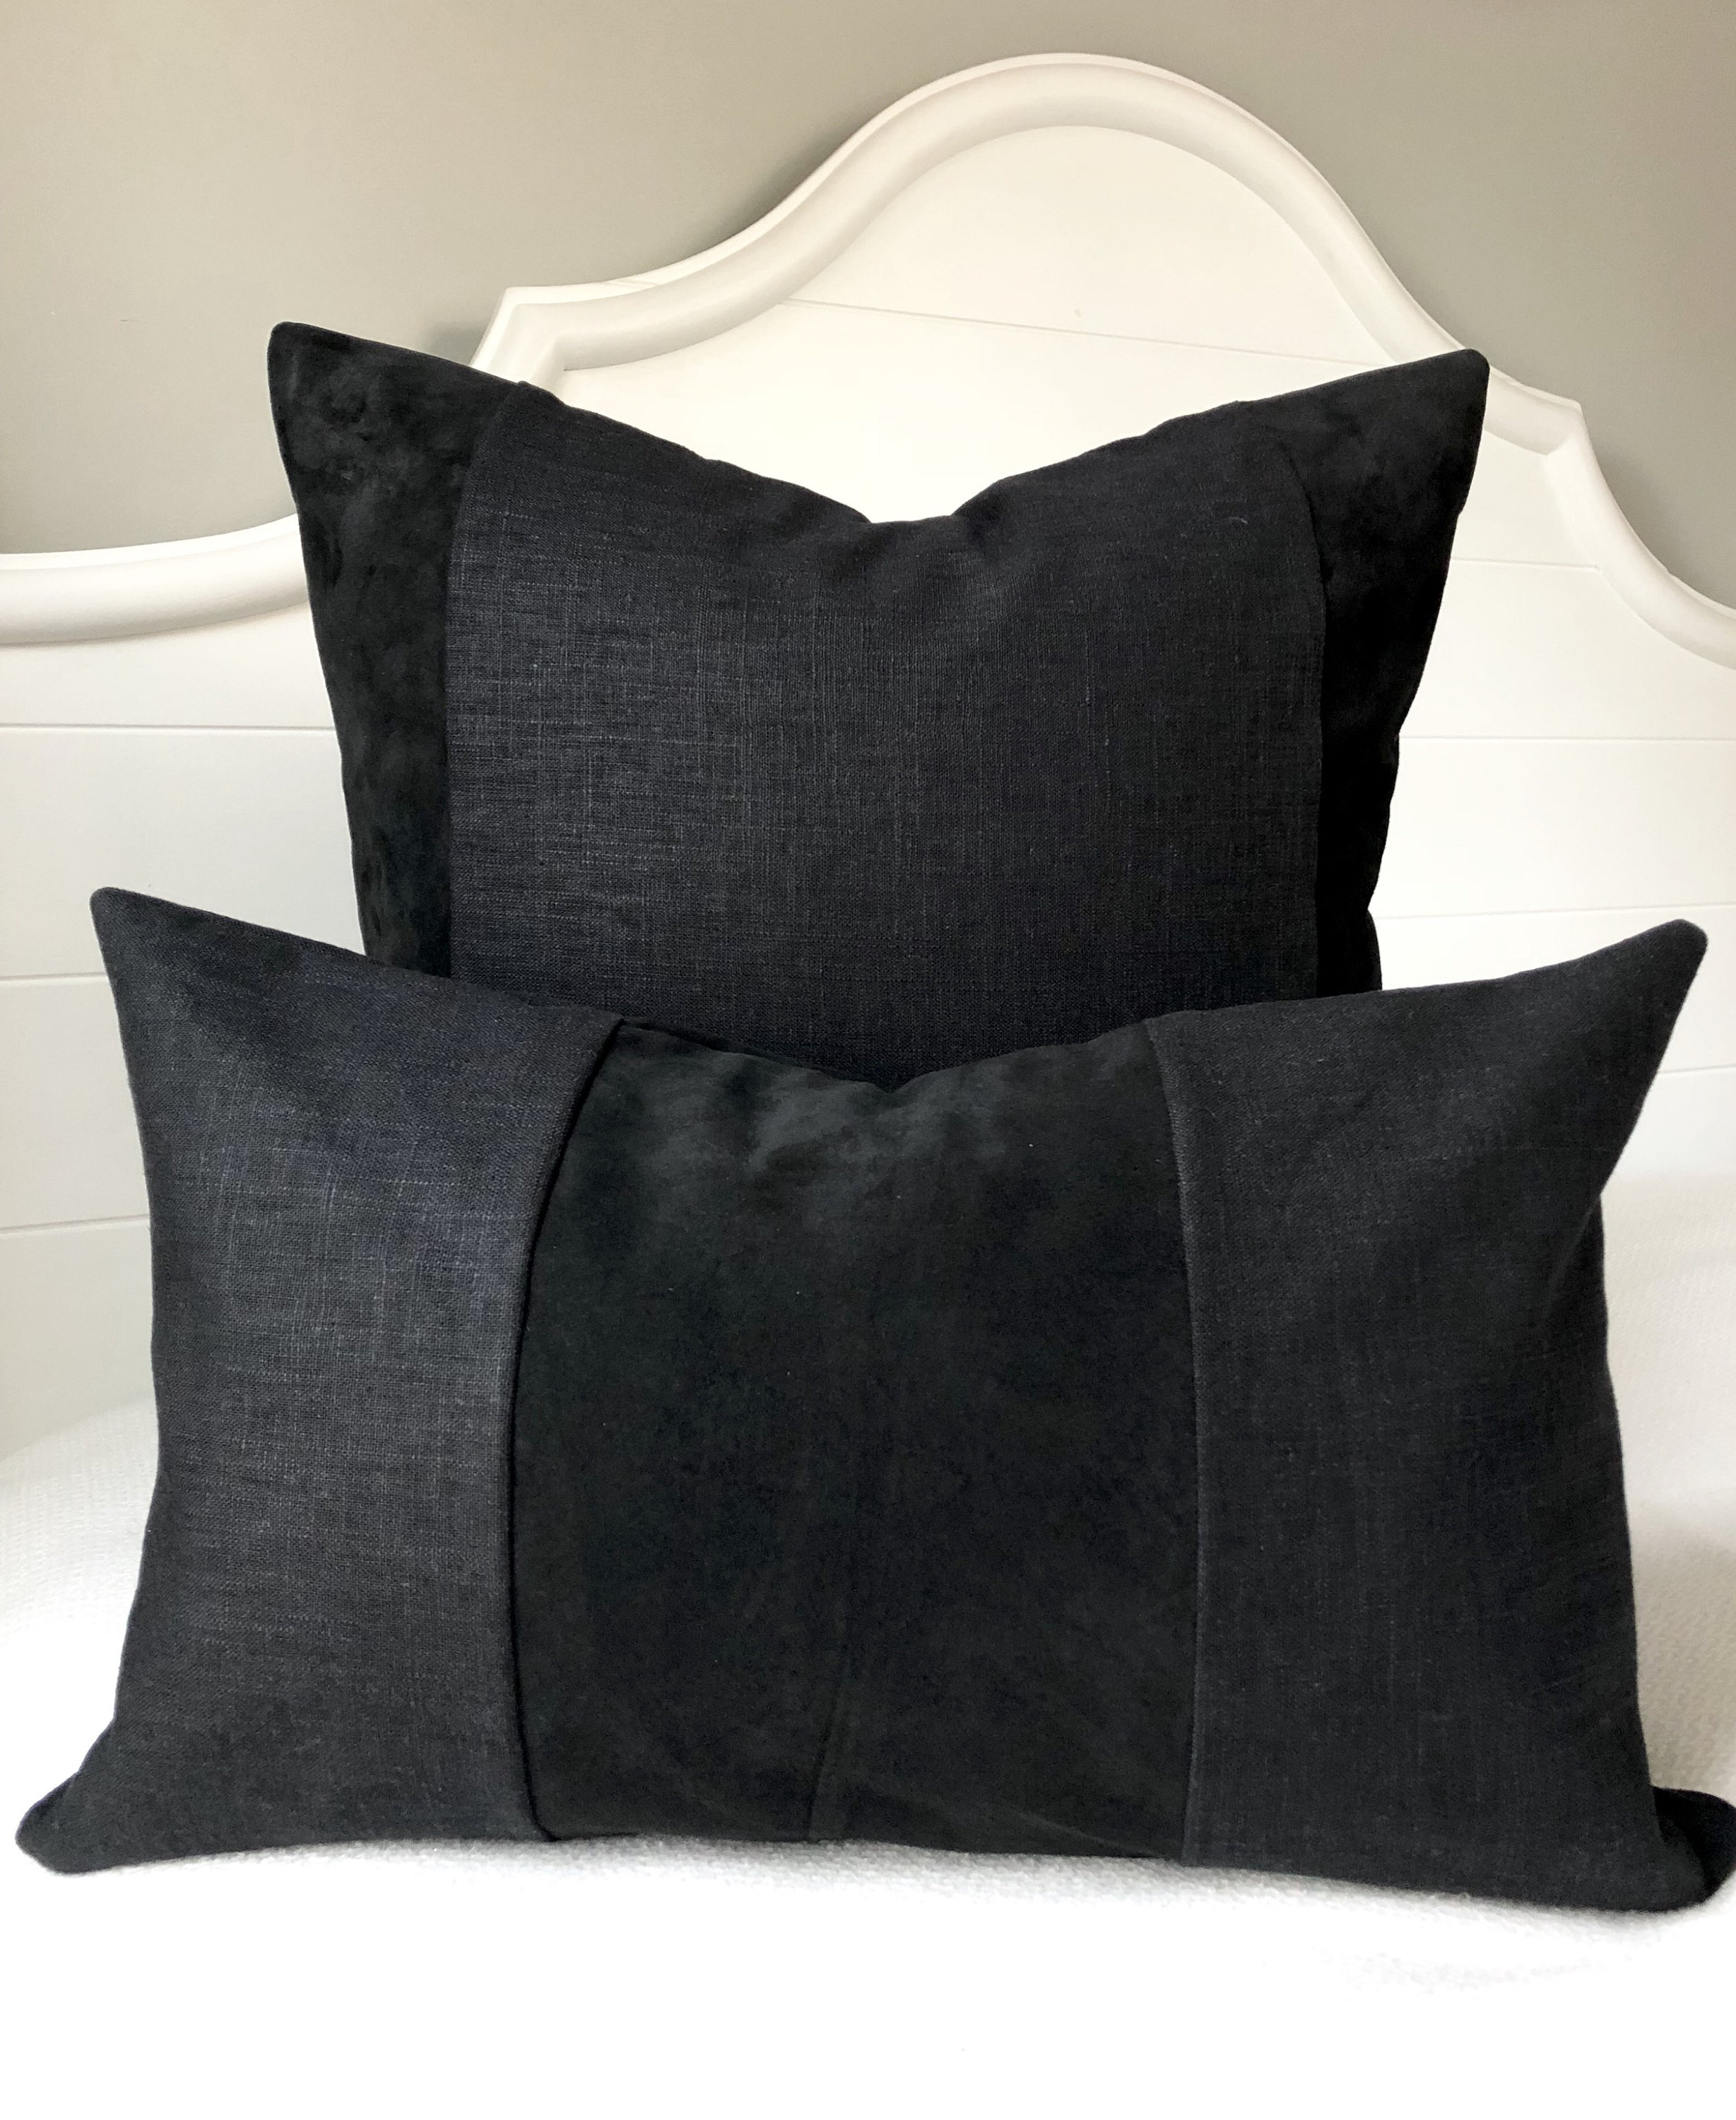  Acanva Solid Velvet Soft Decorative Throw Pillow, 2